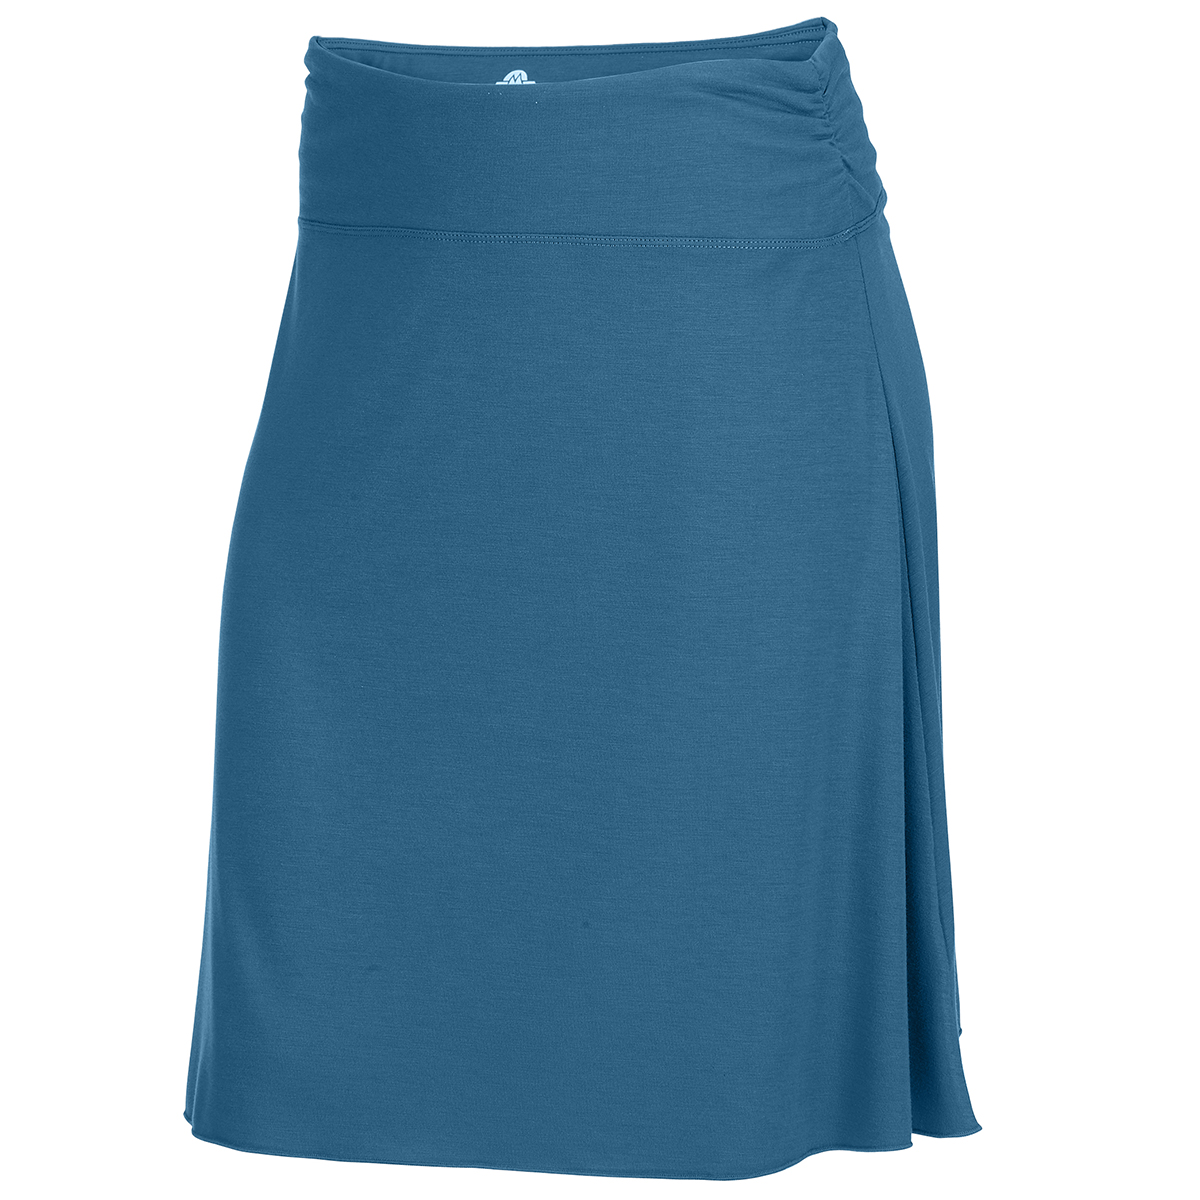 Ems Women's Highland Skirt - Green, XS